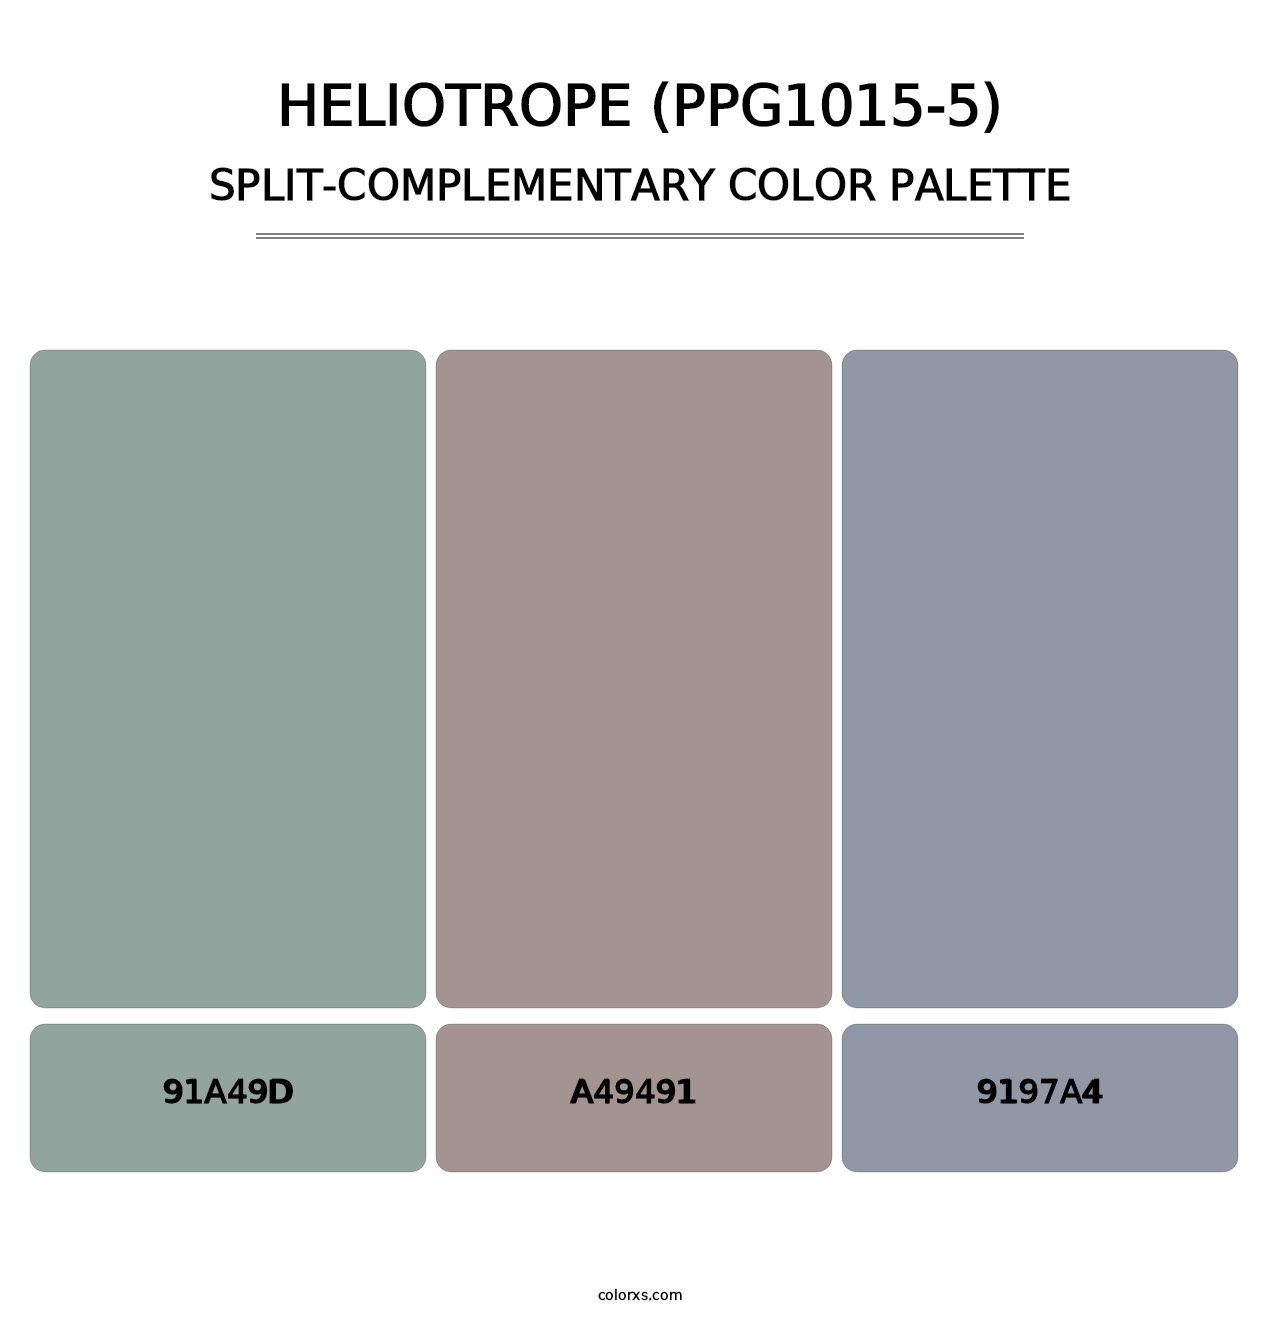 Heliotrope (PPG1015-5) - Split-Complementary Color Palette